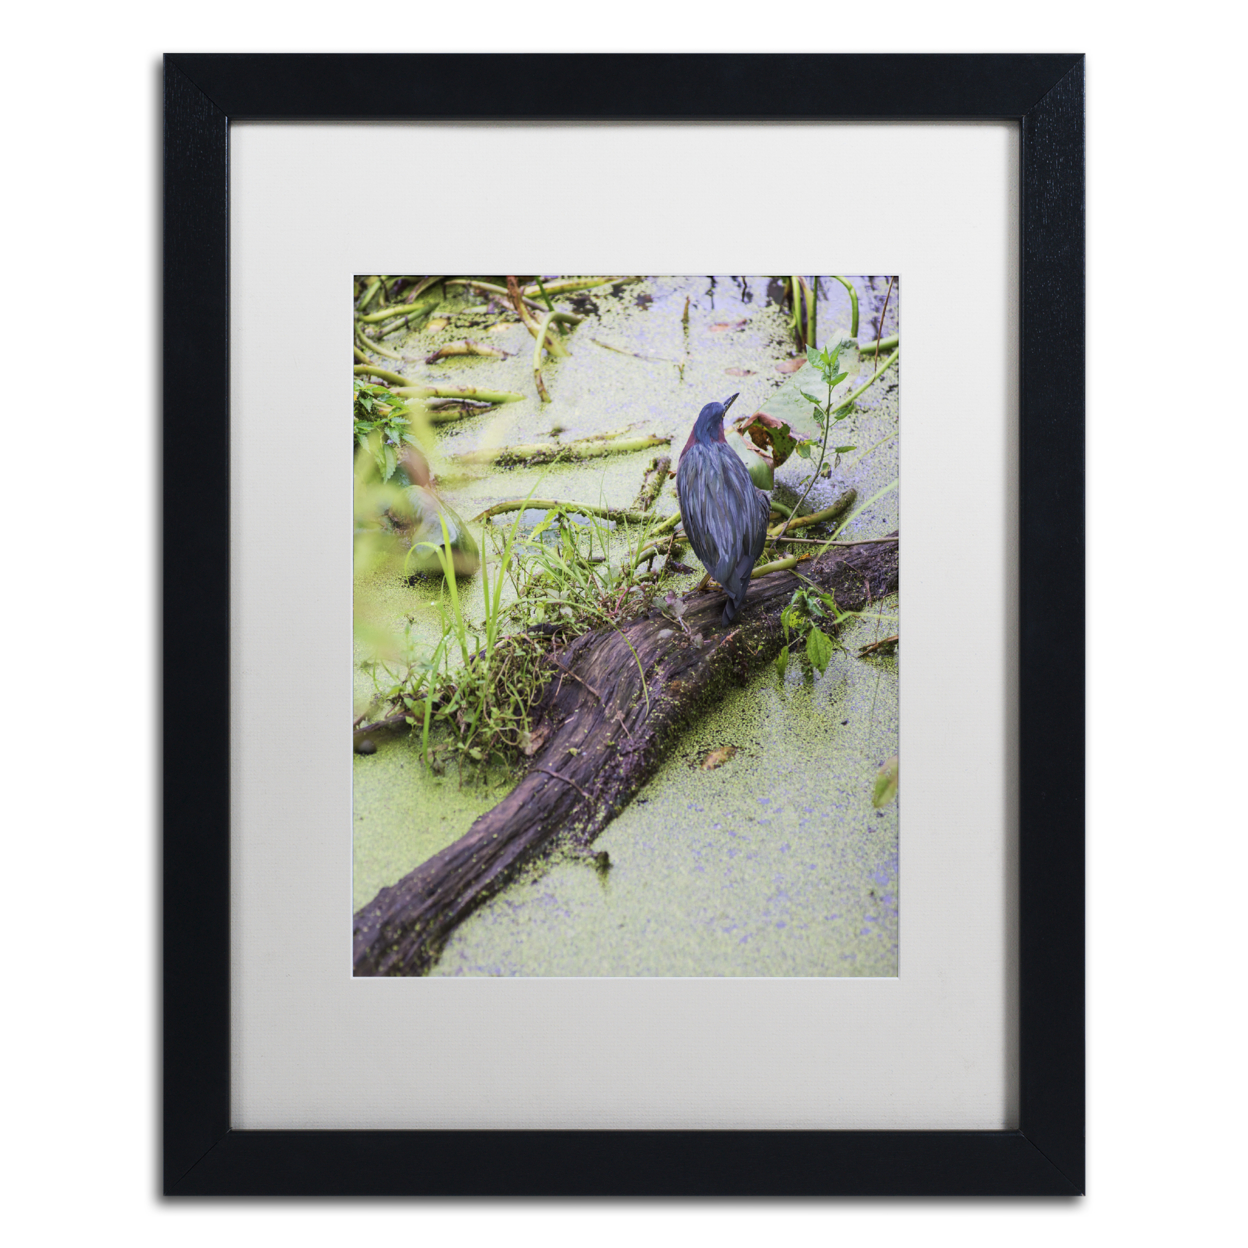 Kurt Shaffer 'Green Heron II' Black Wooden Framed Art 18 X 22 Inches